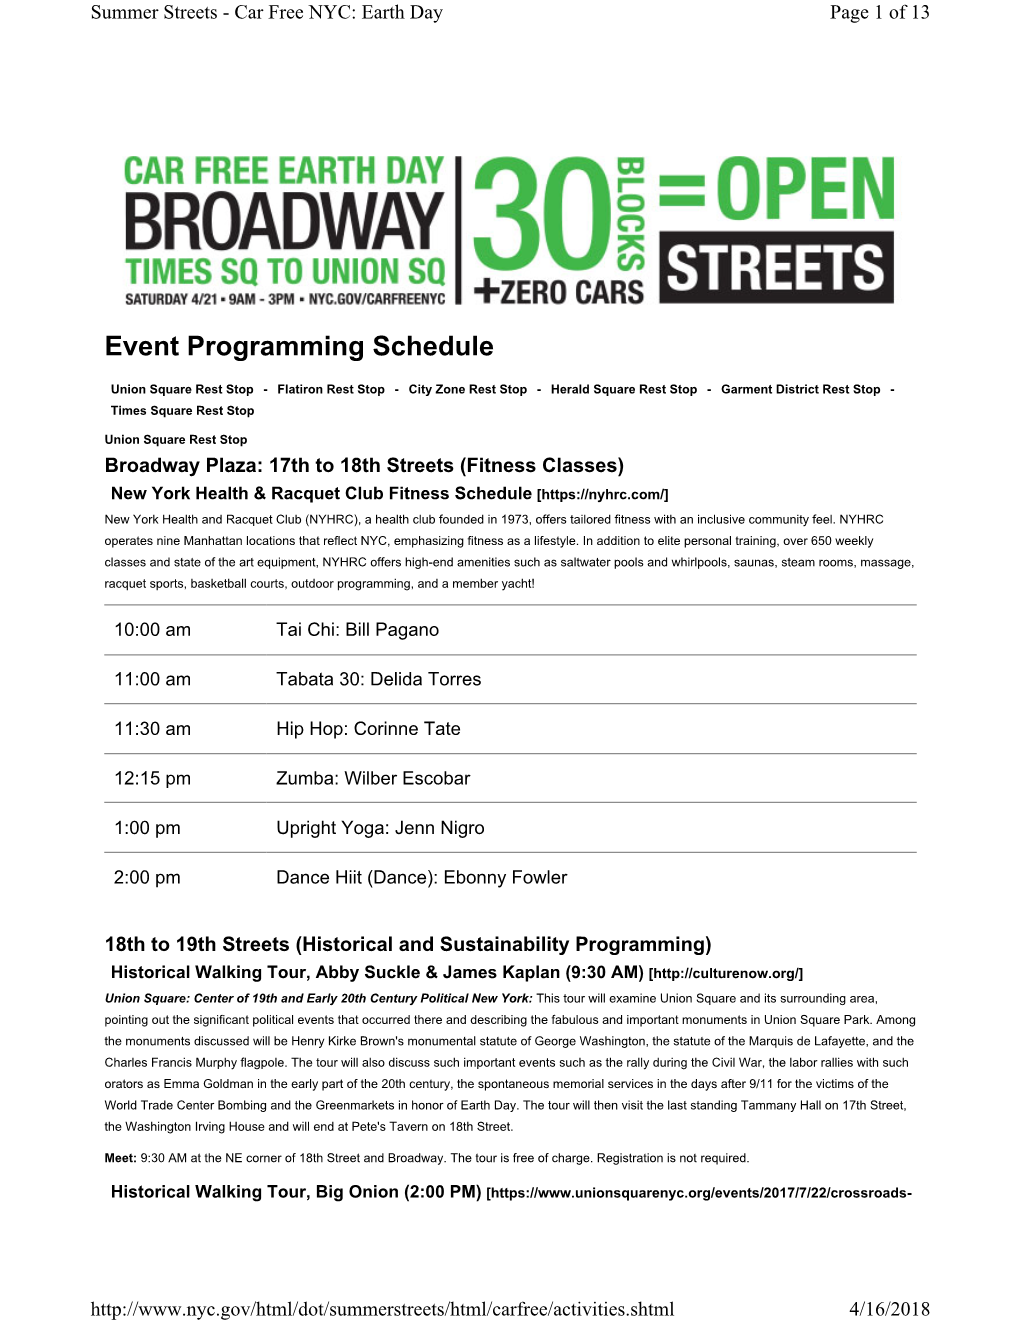 Event Programming Schedule